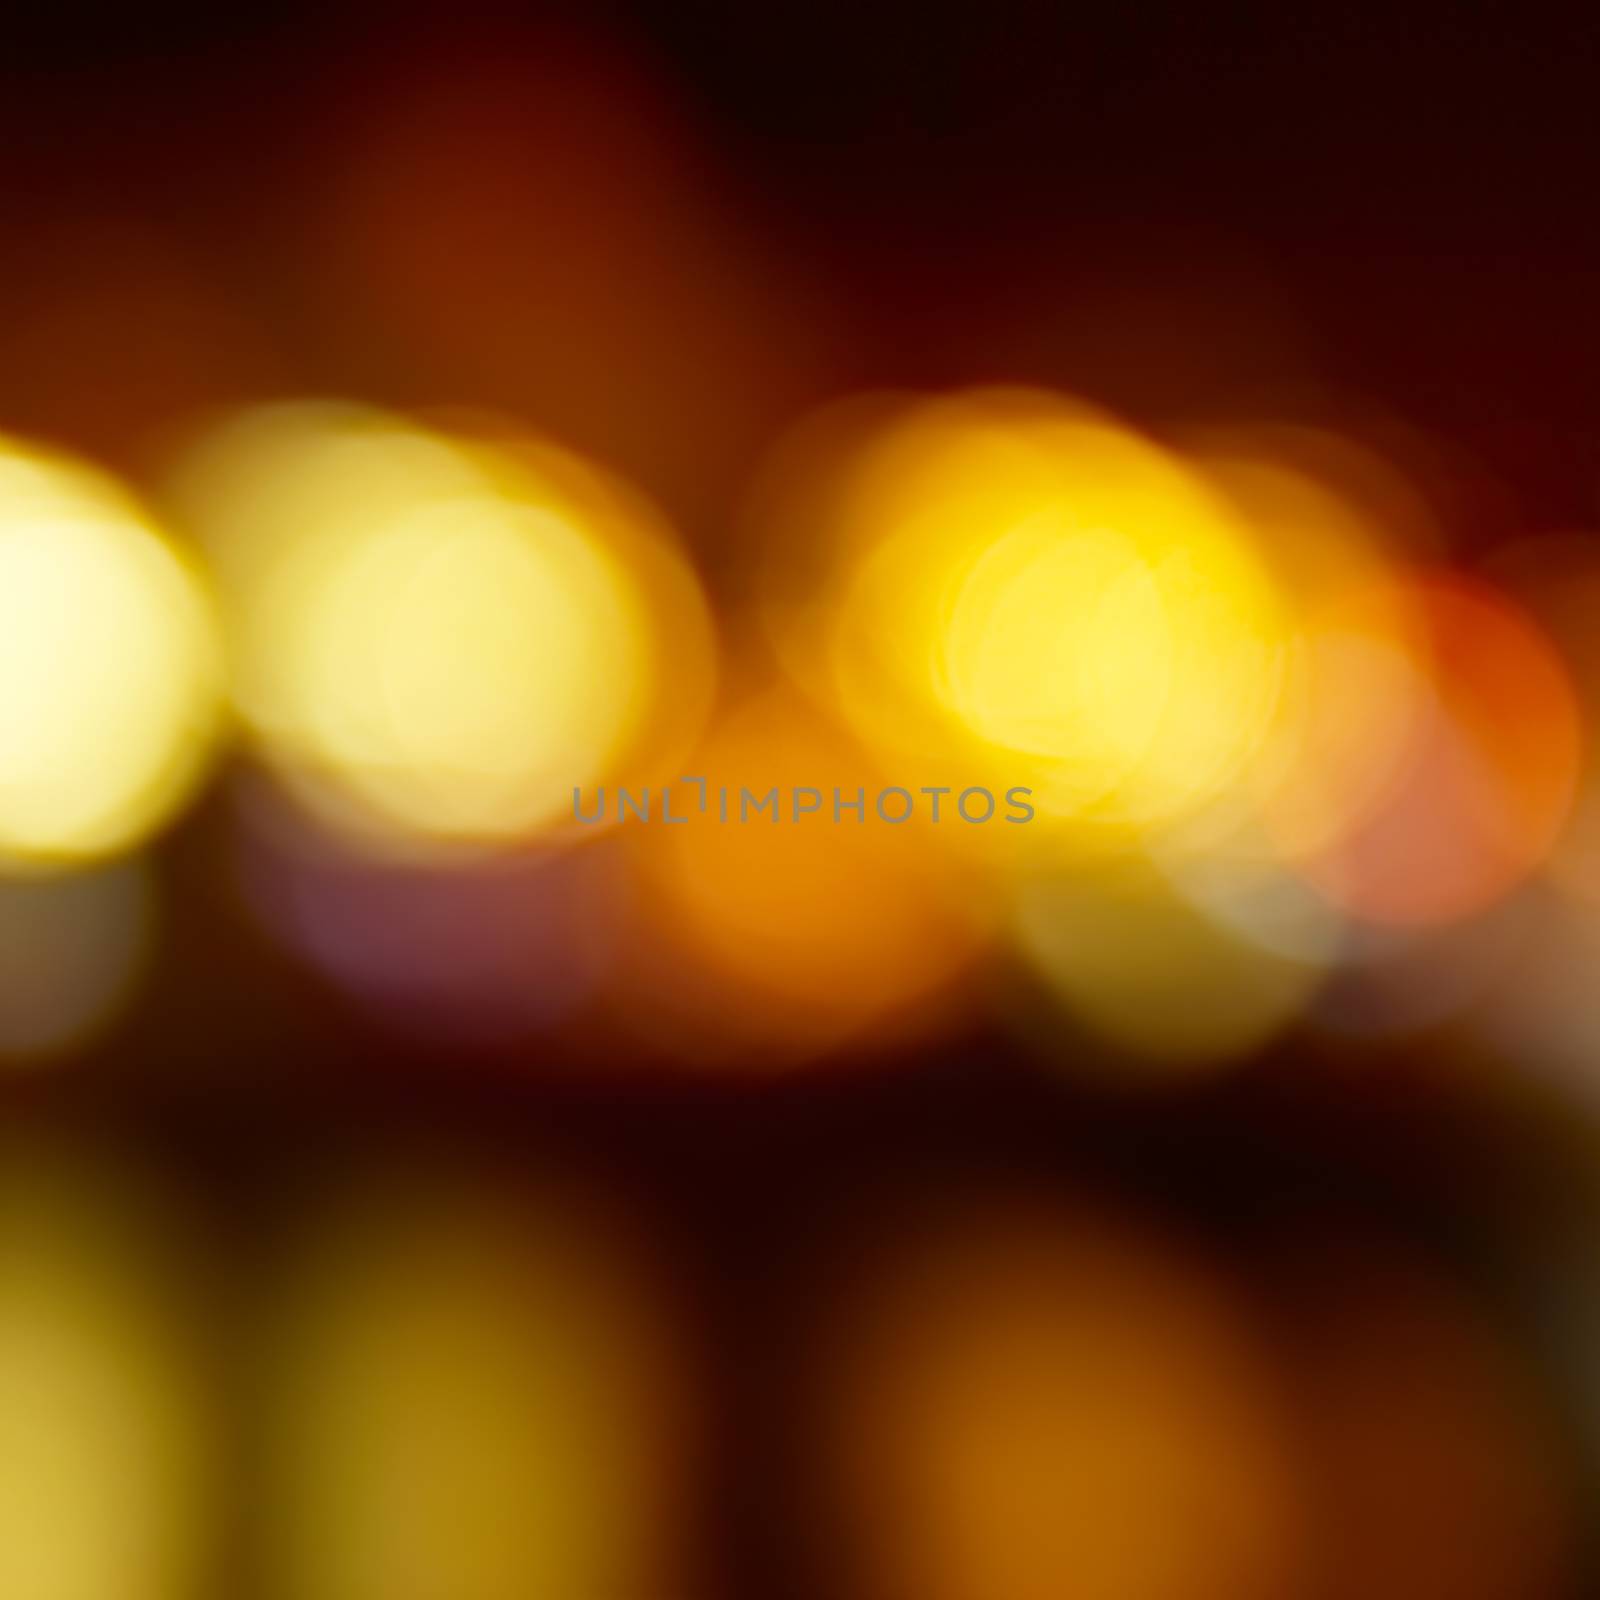 Blur abstract orange holiday lights by vapi